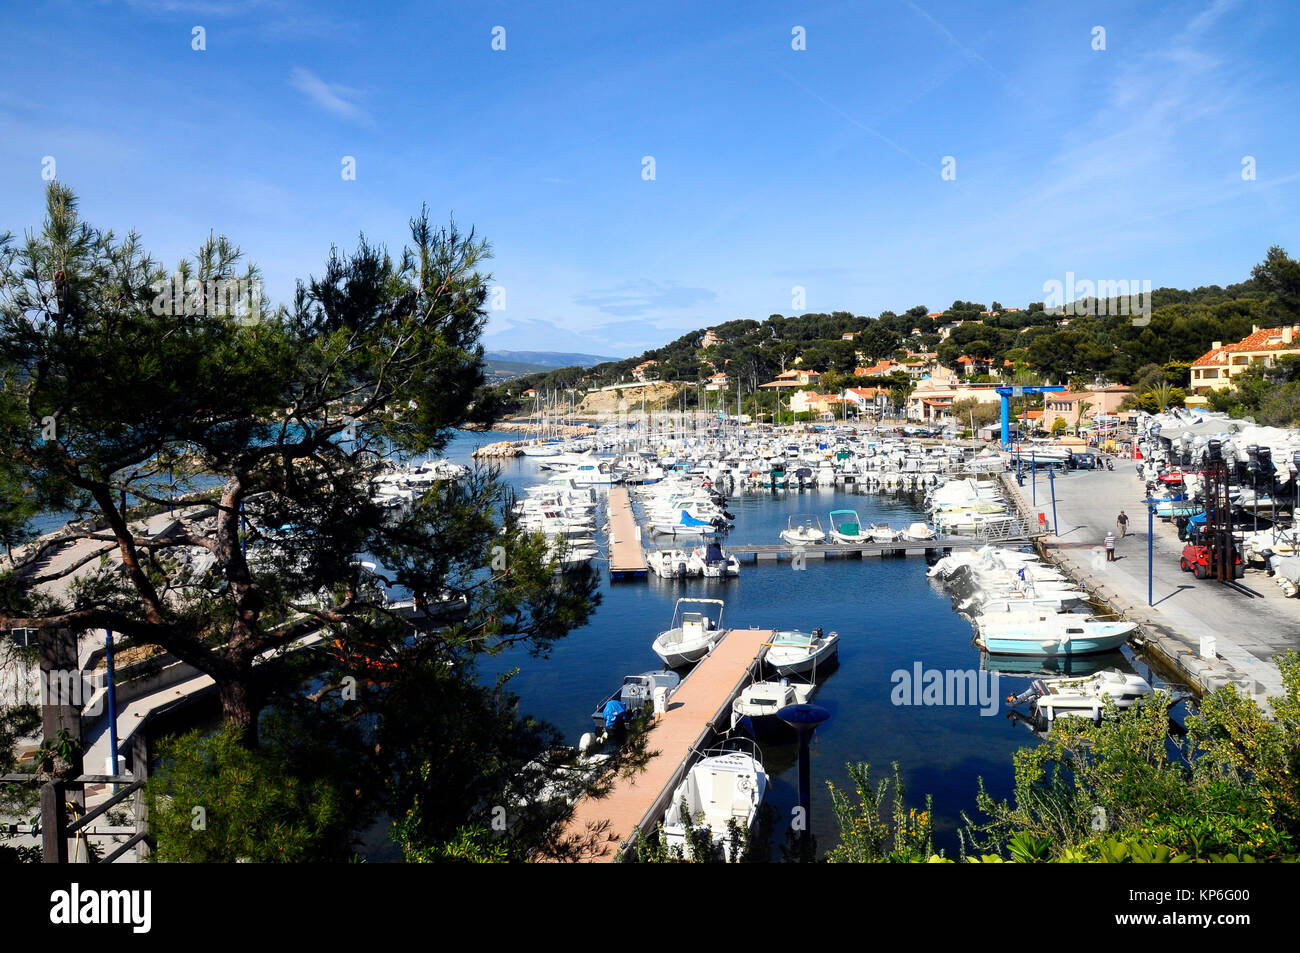 Overview of Marina of La Madrague, Saint-Cyr, near Marseille, France Stock Photo